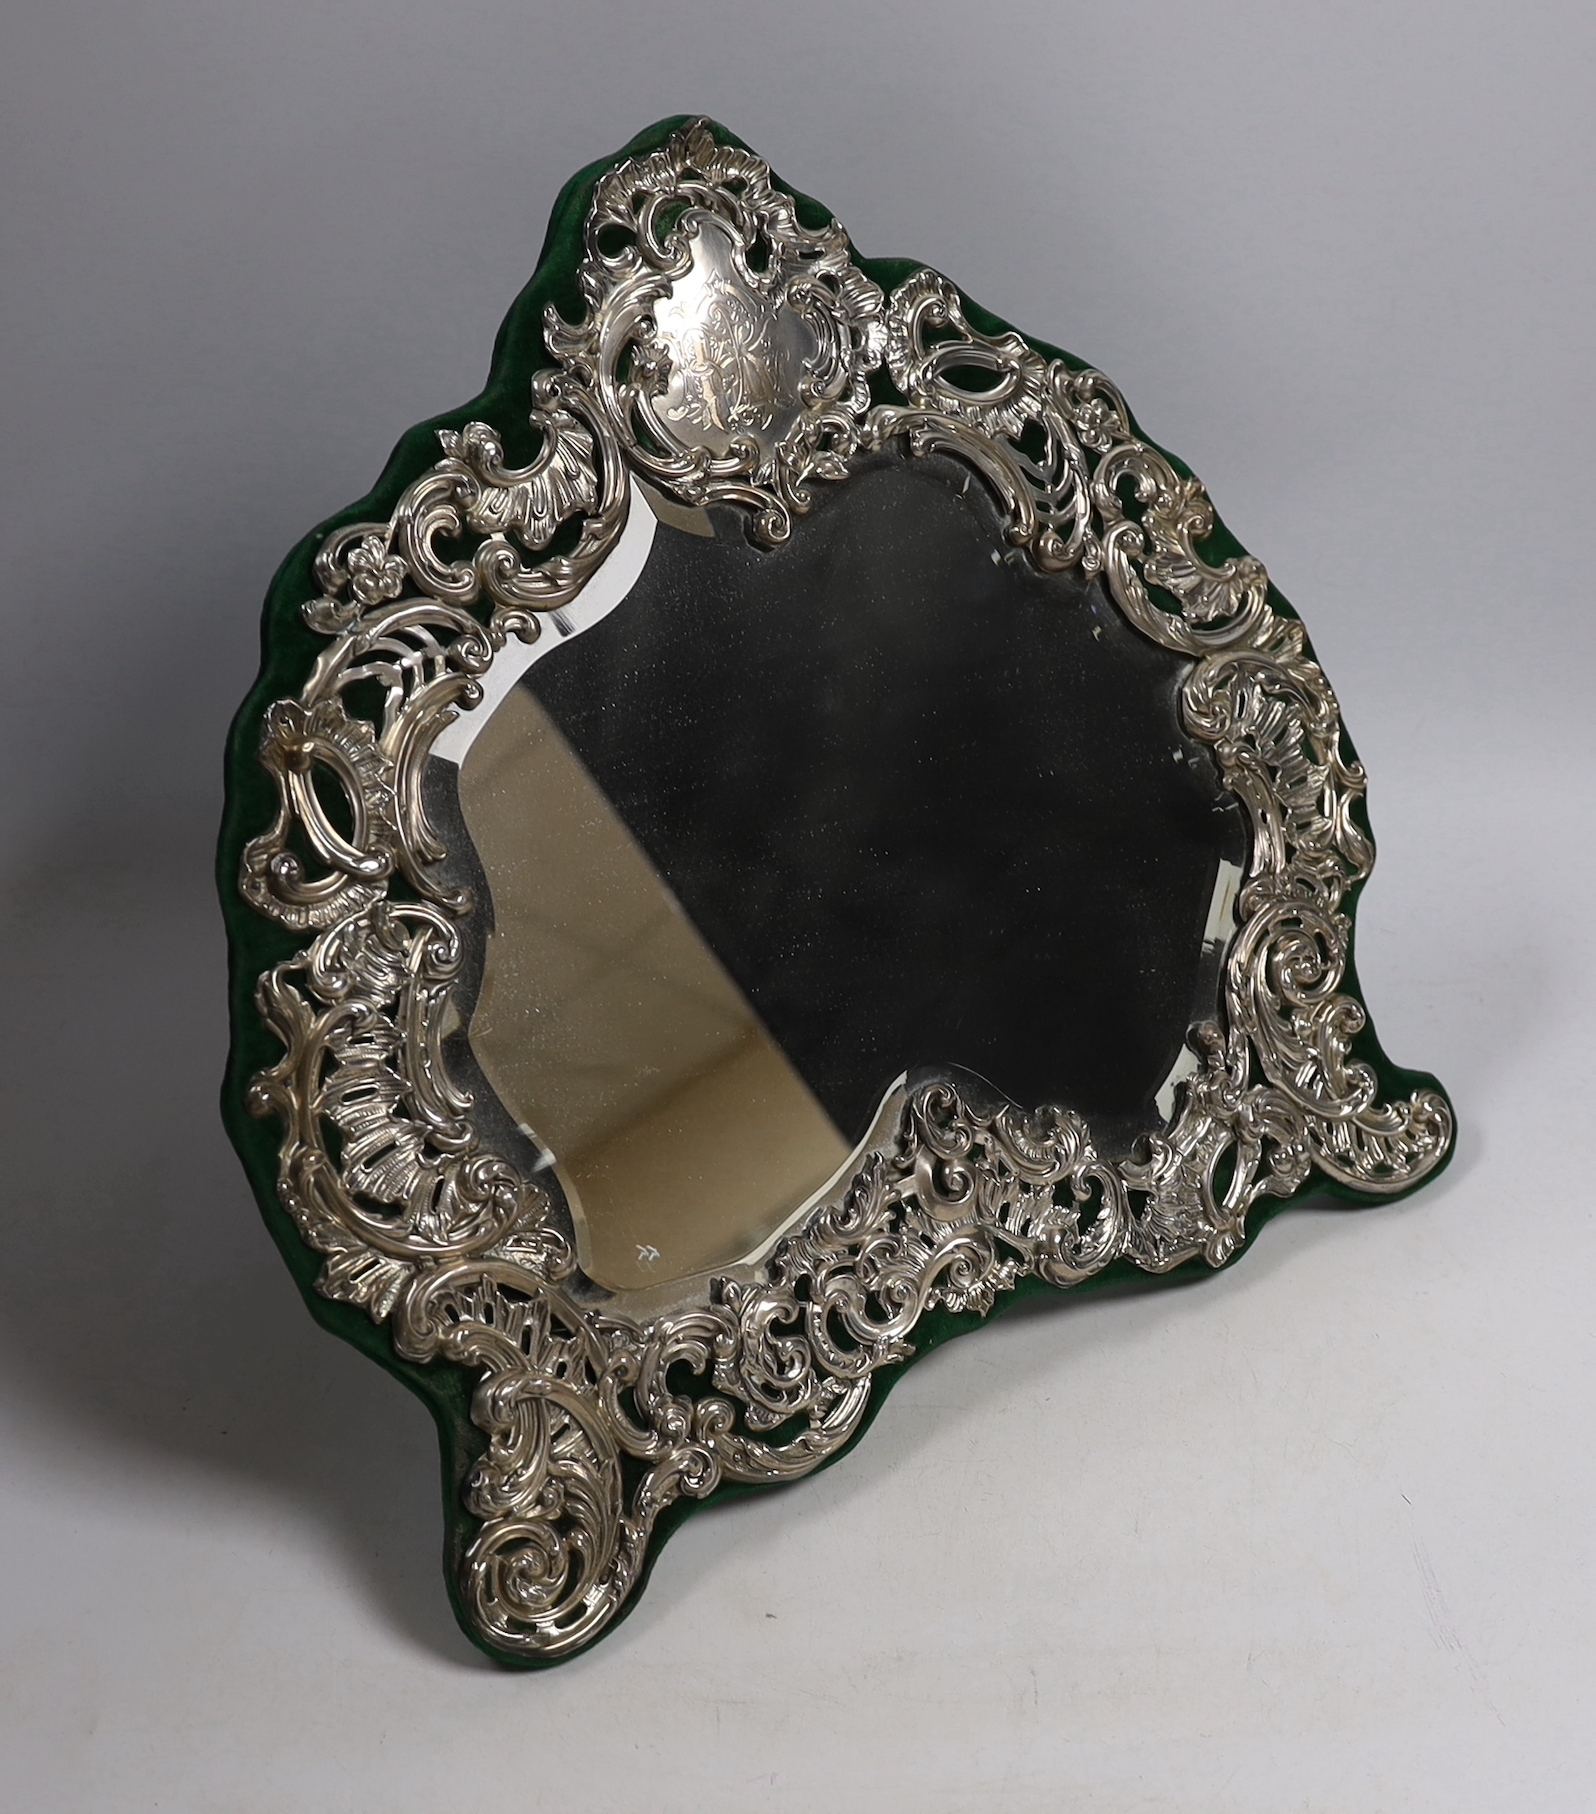 An ornate Edwardian silver mounted easel dressing table mirror, Henry Matthews, Birmingham, 1902, height 35cm.